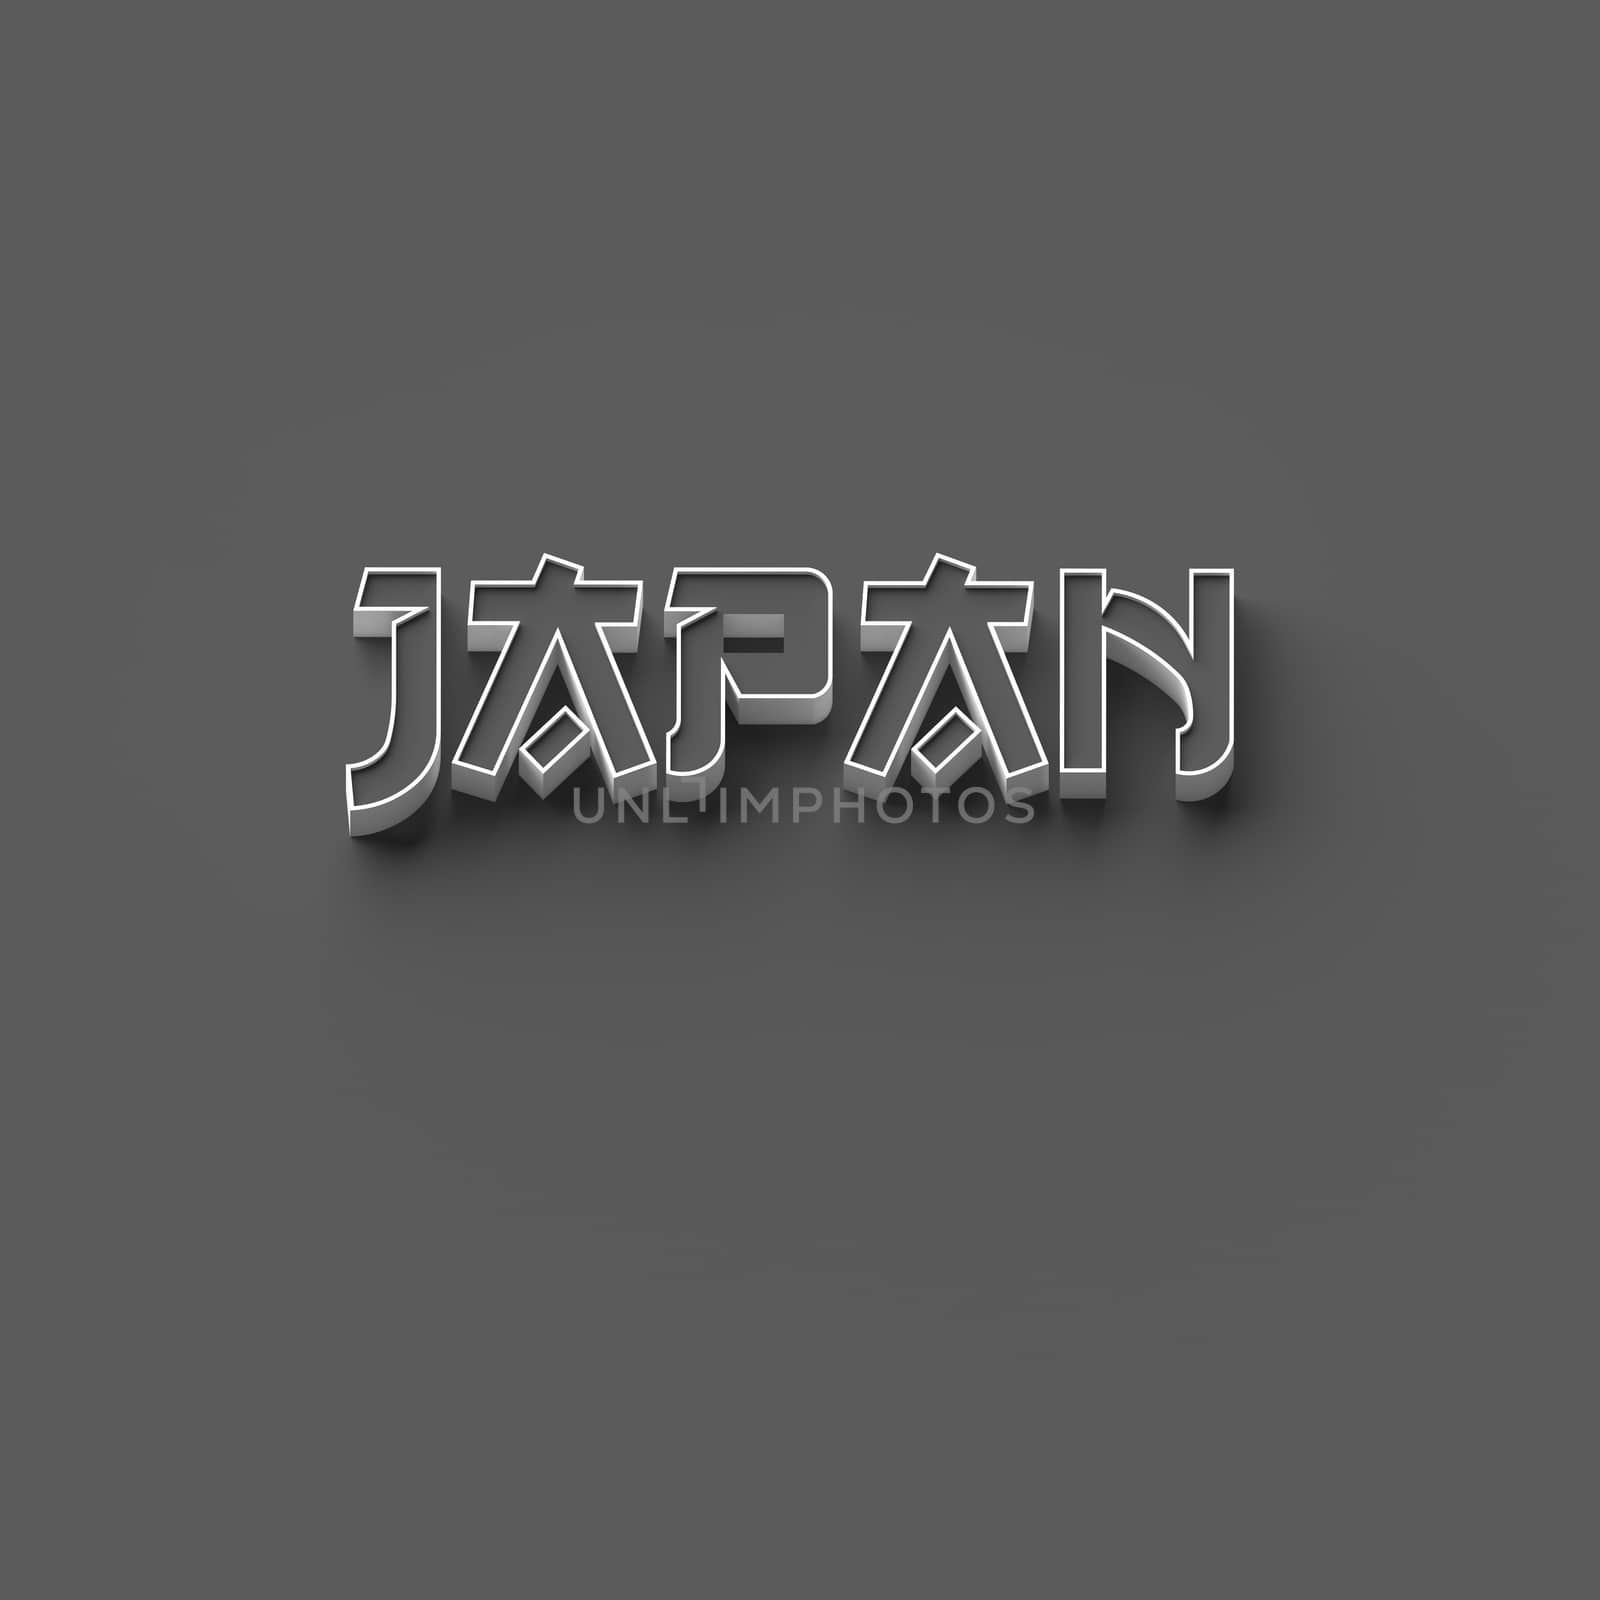 3D RENDERING WORDS 'JAPAN' ON GREY PLAIN BACKGROUND